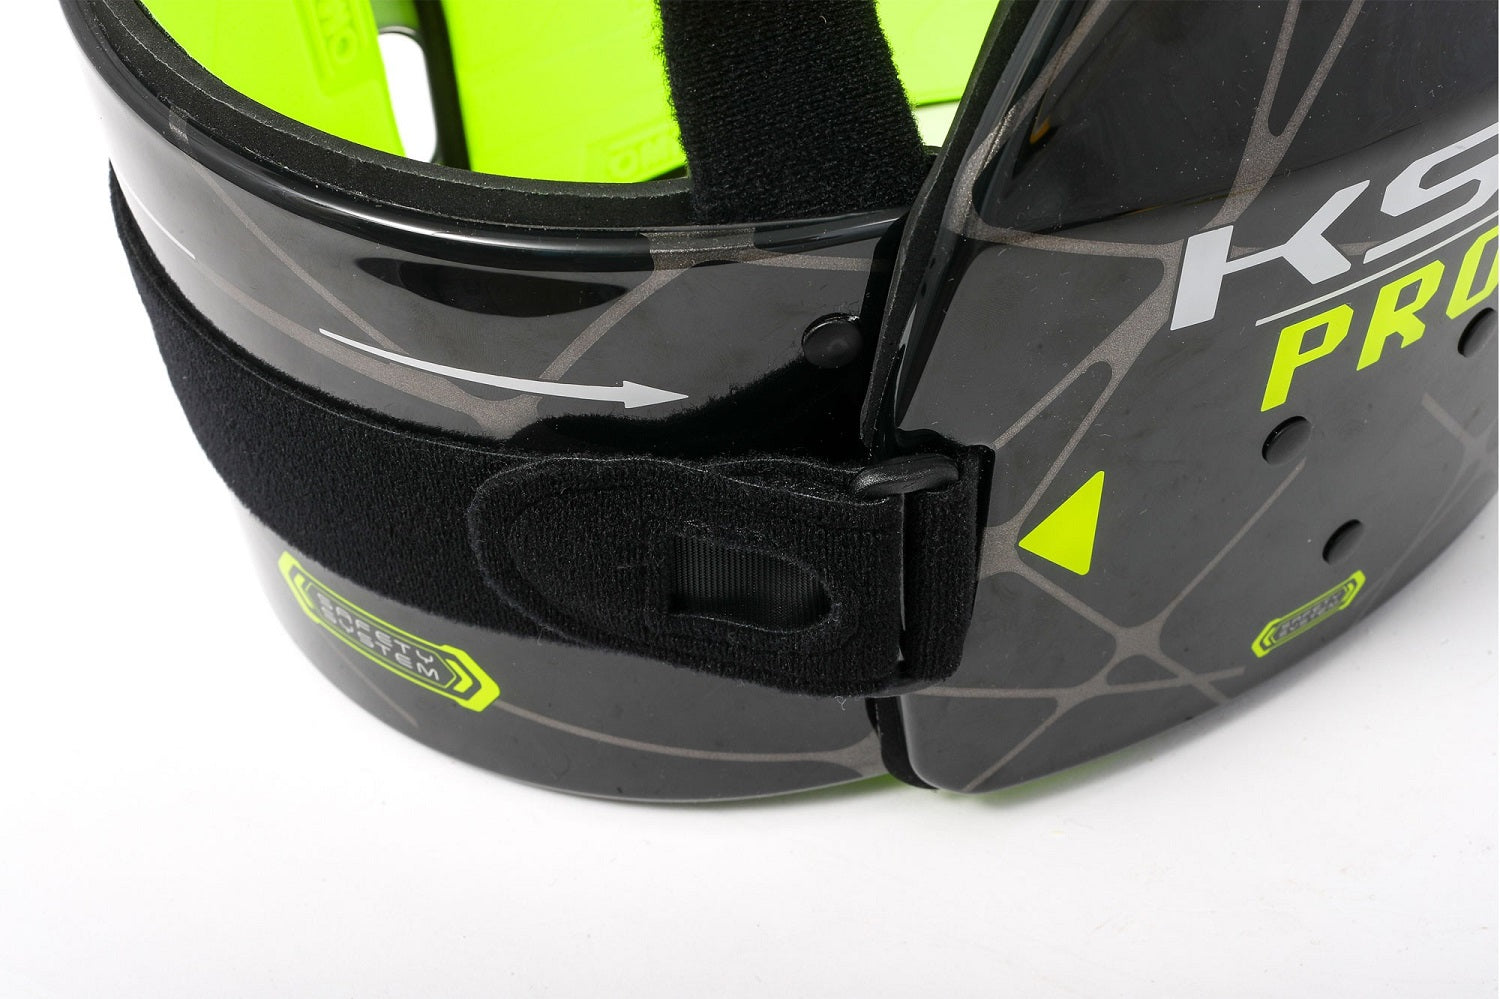 OMP KK0-0049-B01-178-XL (KK049178XL) KS-1 PRO Karting Body Protection, FIA 8870-2018, black/yellow, size XL Photo-1 